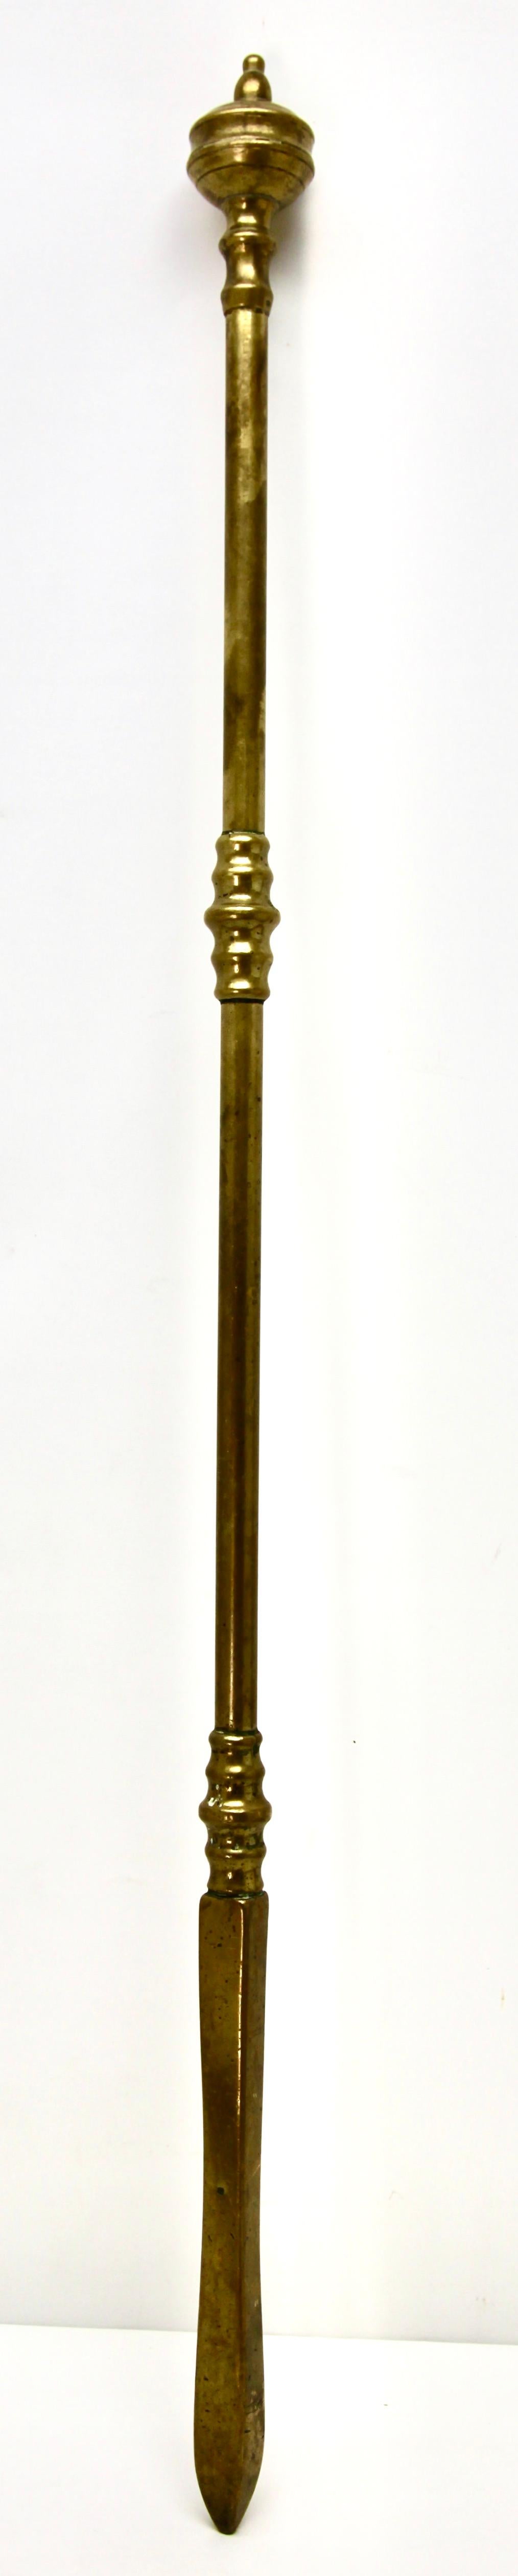 Sculptural Very Decorative Solid Brass Three-Piece Fire Tool Set, 1870s 5